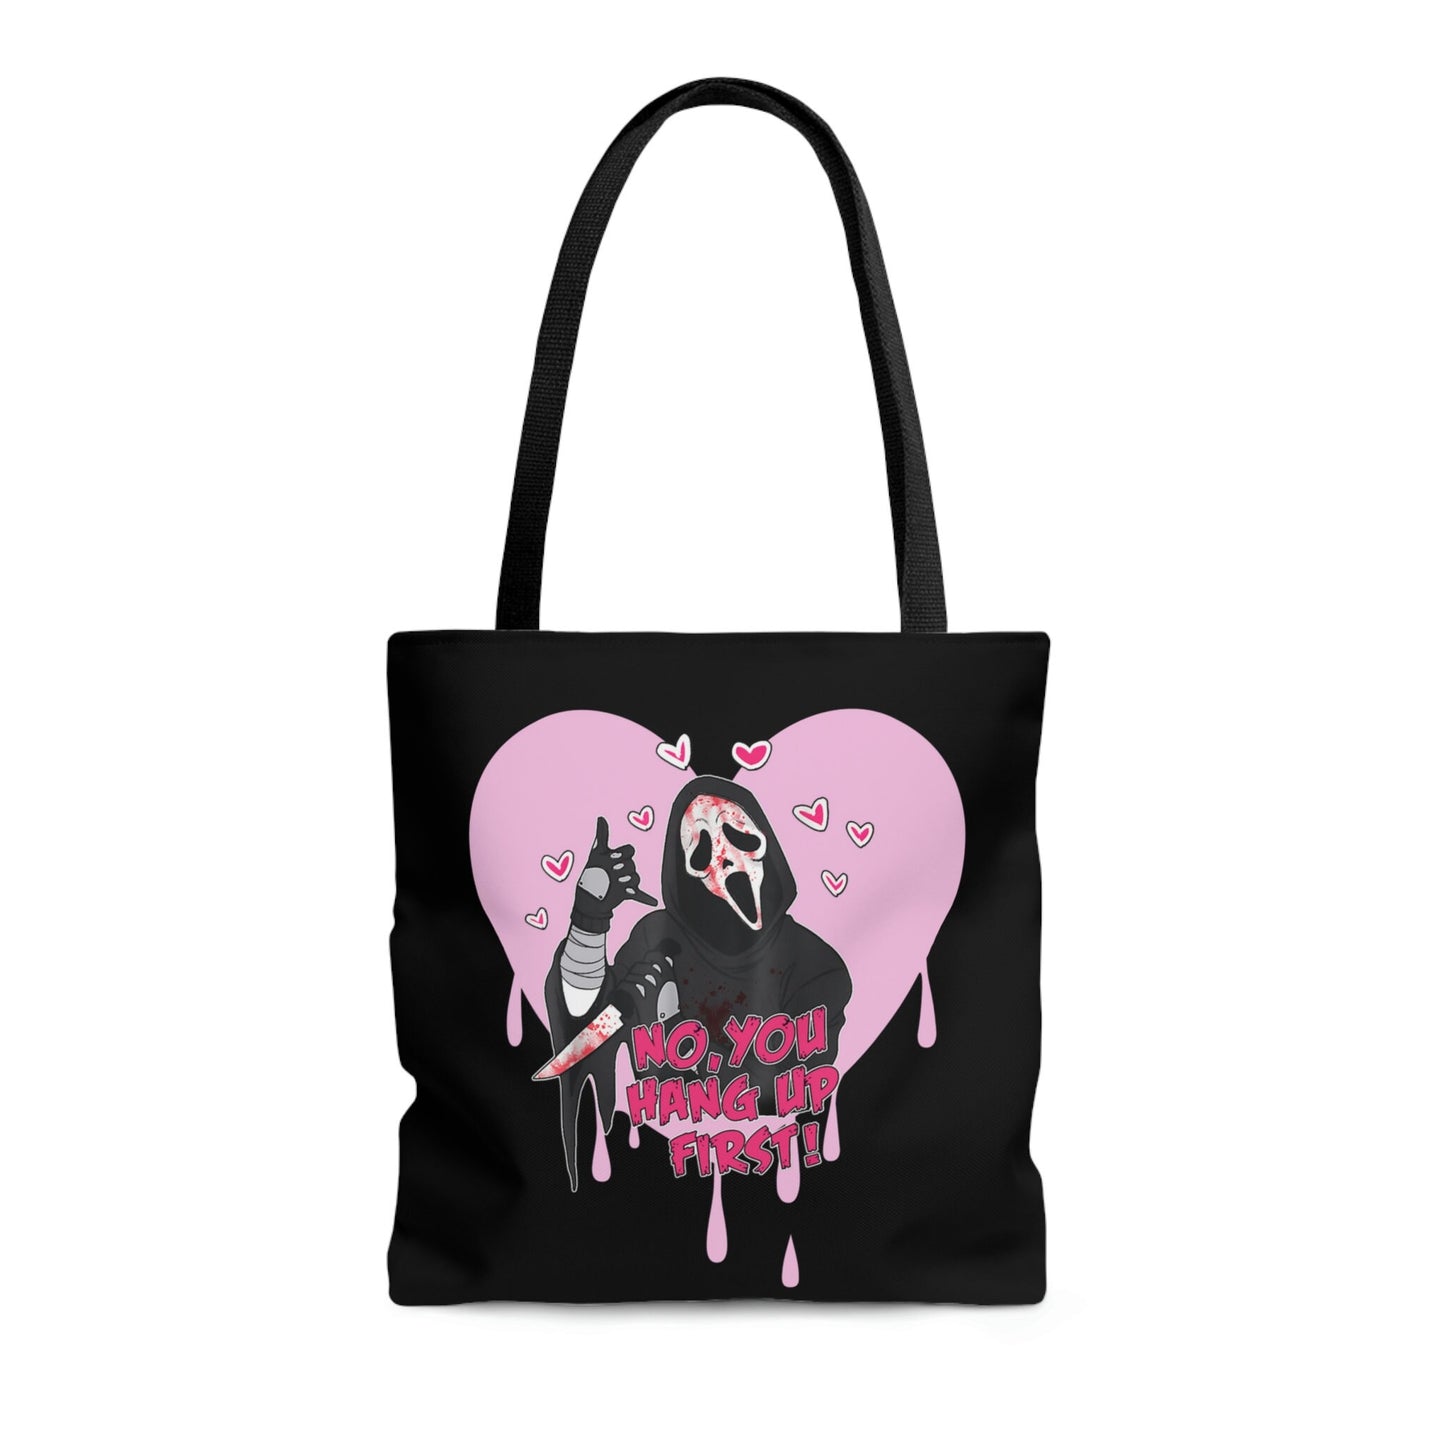 Scream tote bag, Gothic book bag, Ghostface merch, Spooky shopping bag, Witchy bag, Horror merch, Horror bag